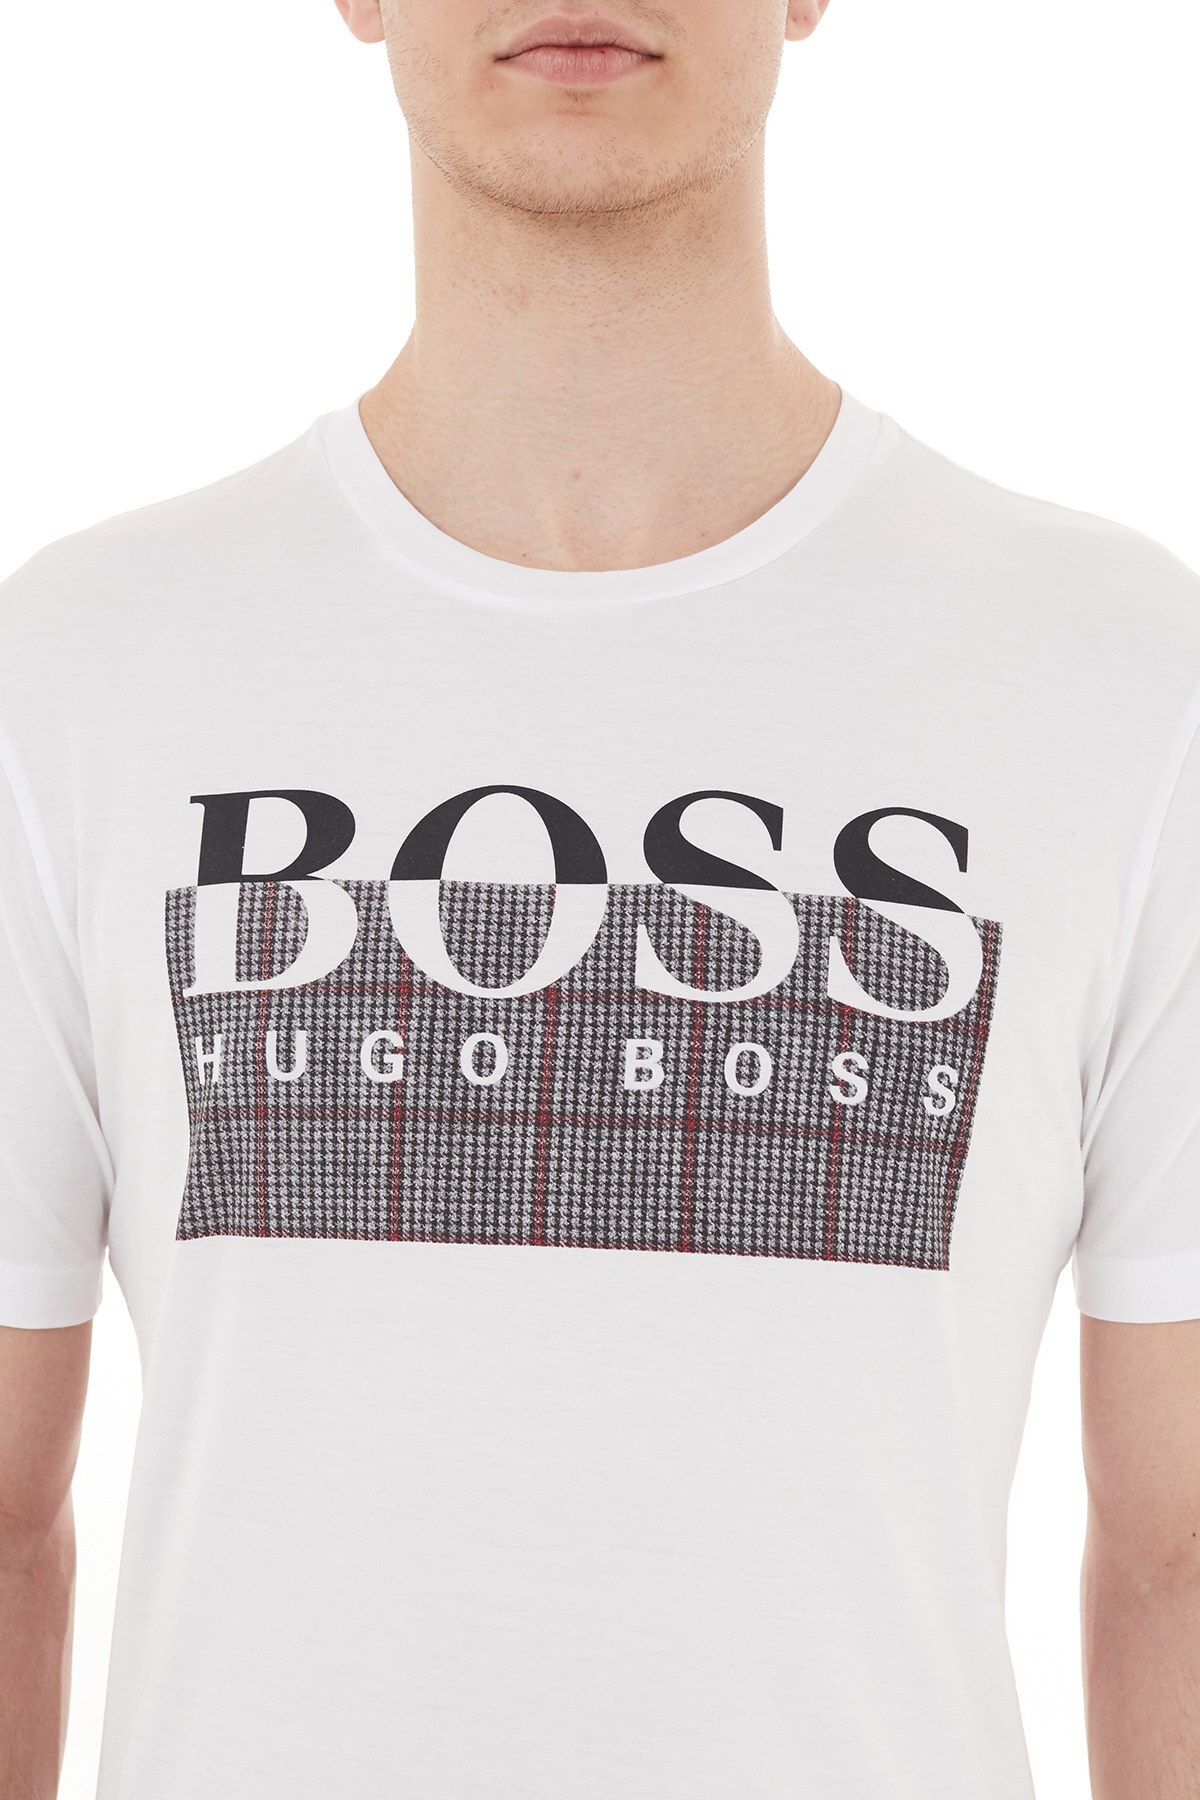 Hugo Boss Regular Fit Baskılı Bisiklet Yaka % 100 Pamuk Erkek T Shirt 50439032 101 BEYAZ